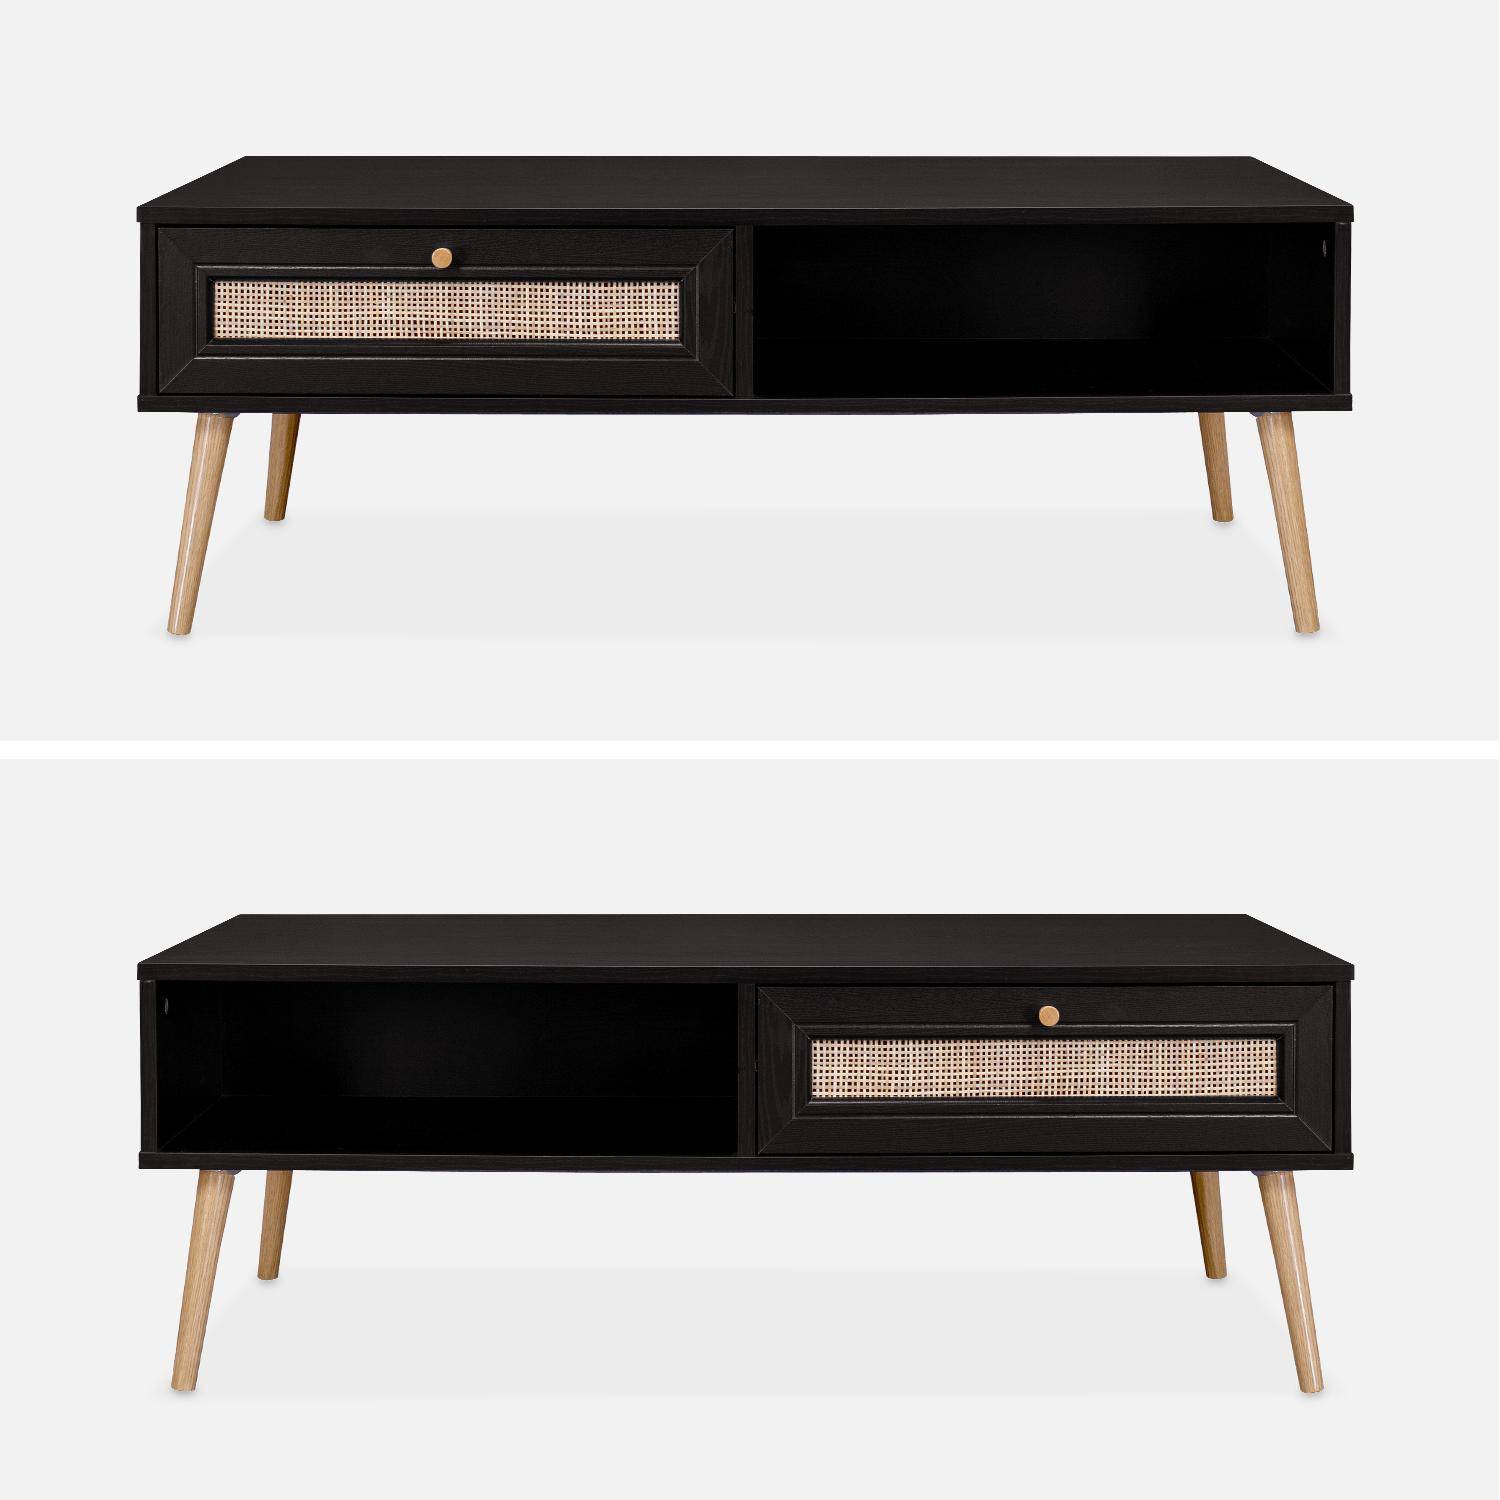  Wood and woven rattan coffee table with storage, 110x59x39cm, black, Boheme,sweeek,Photo3